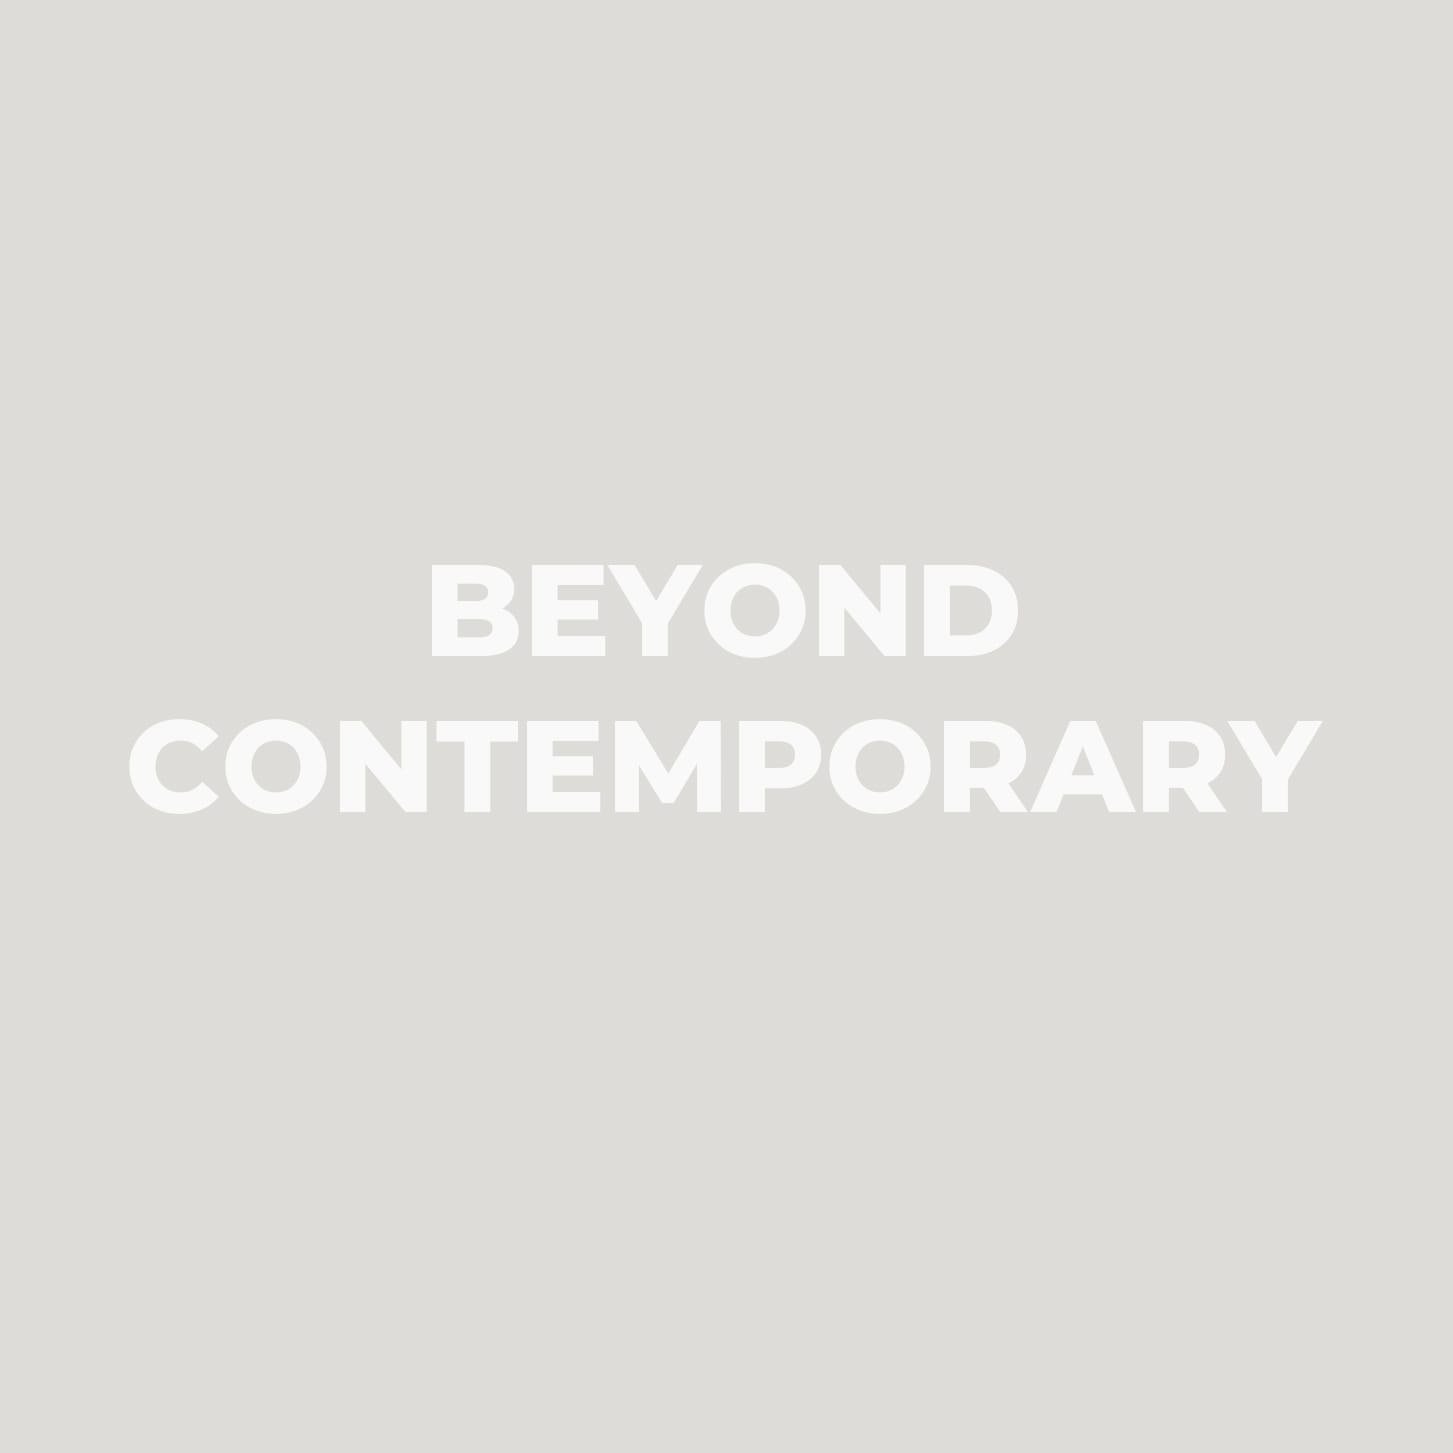 Beyound contemporary